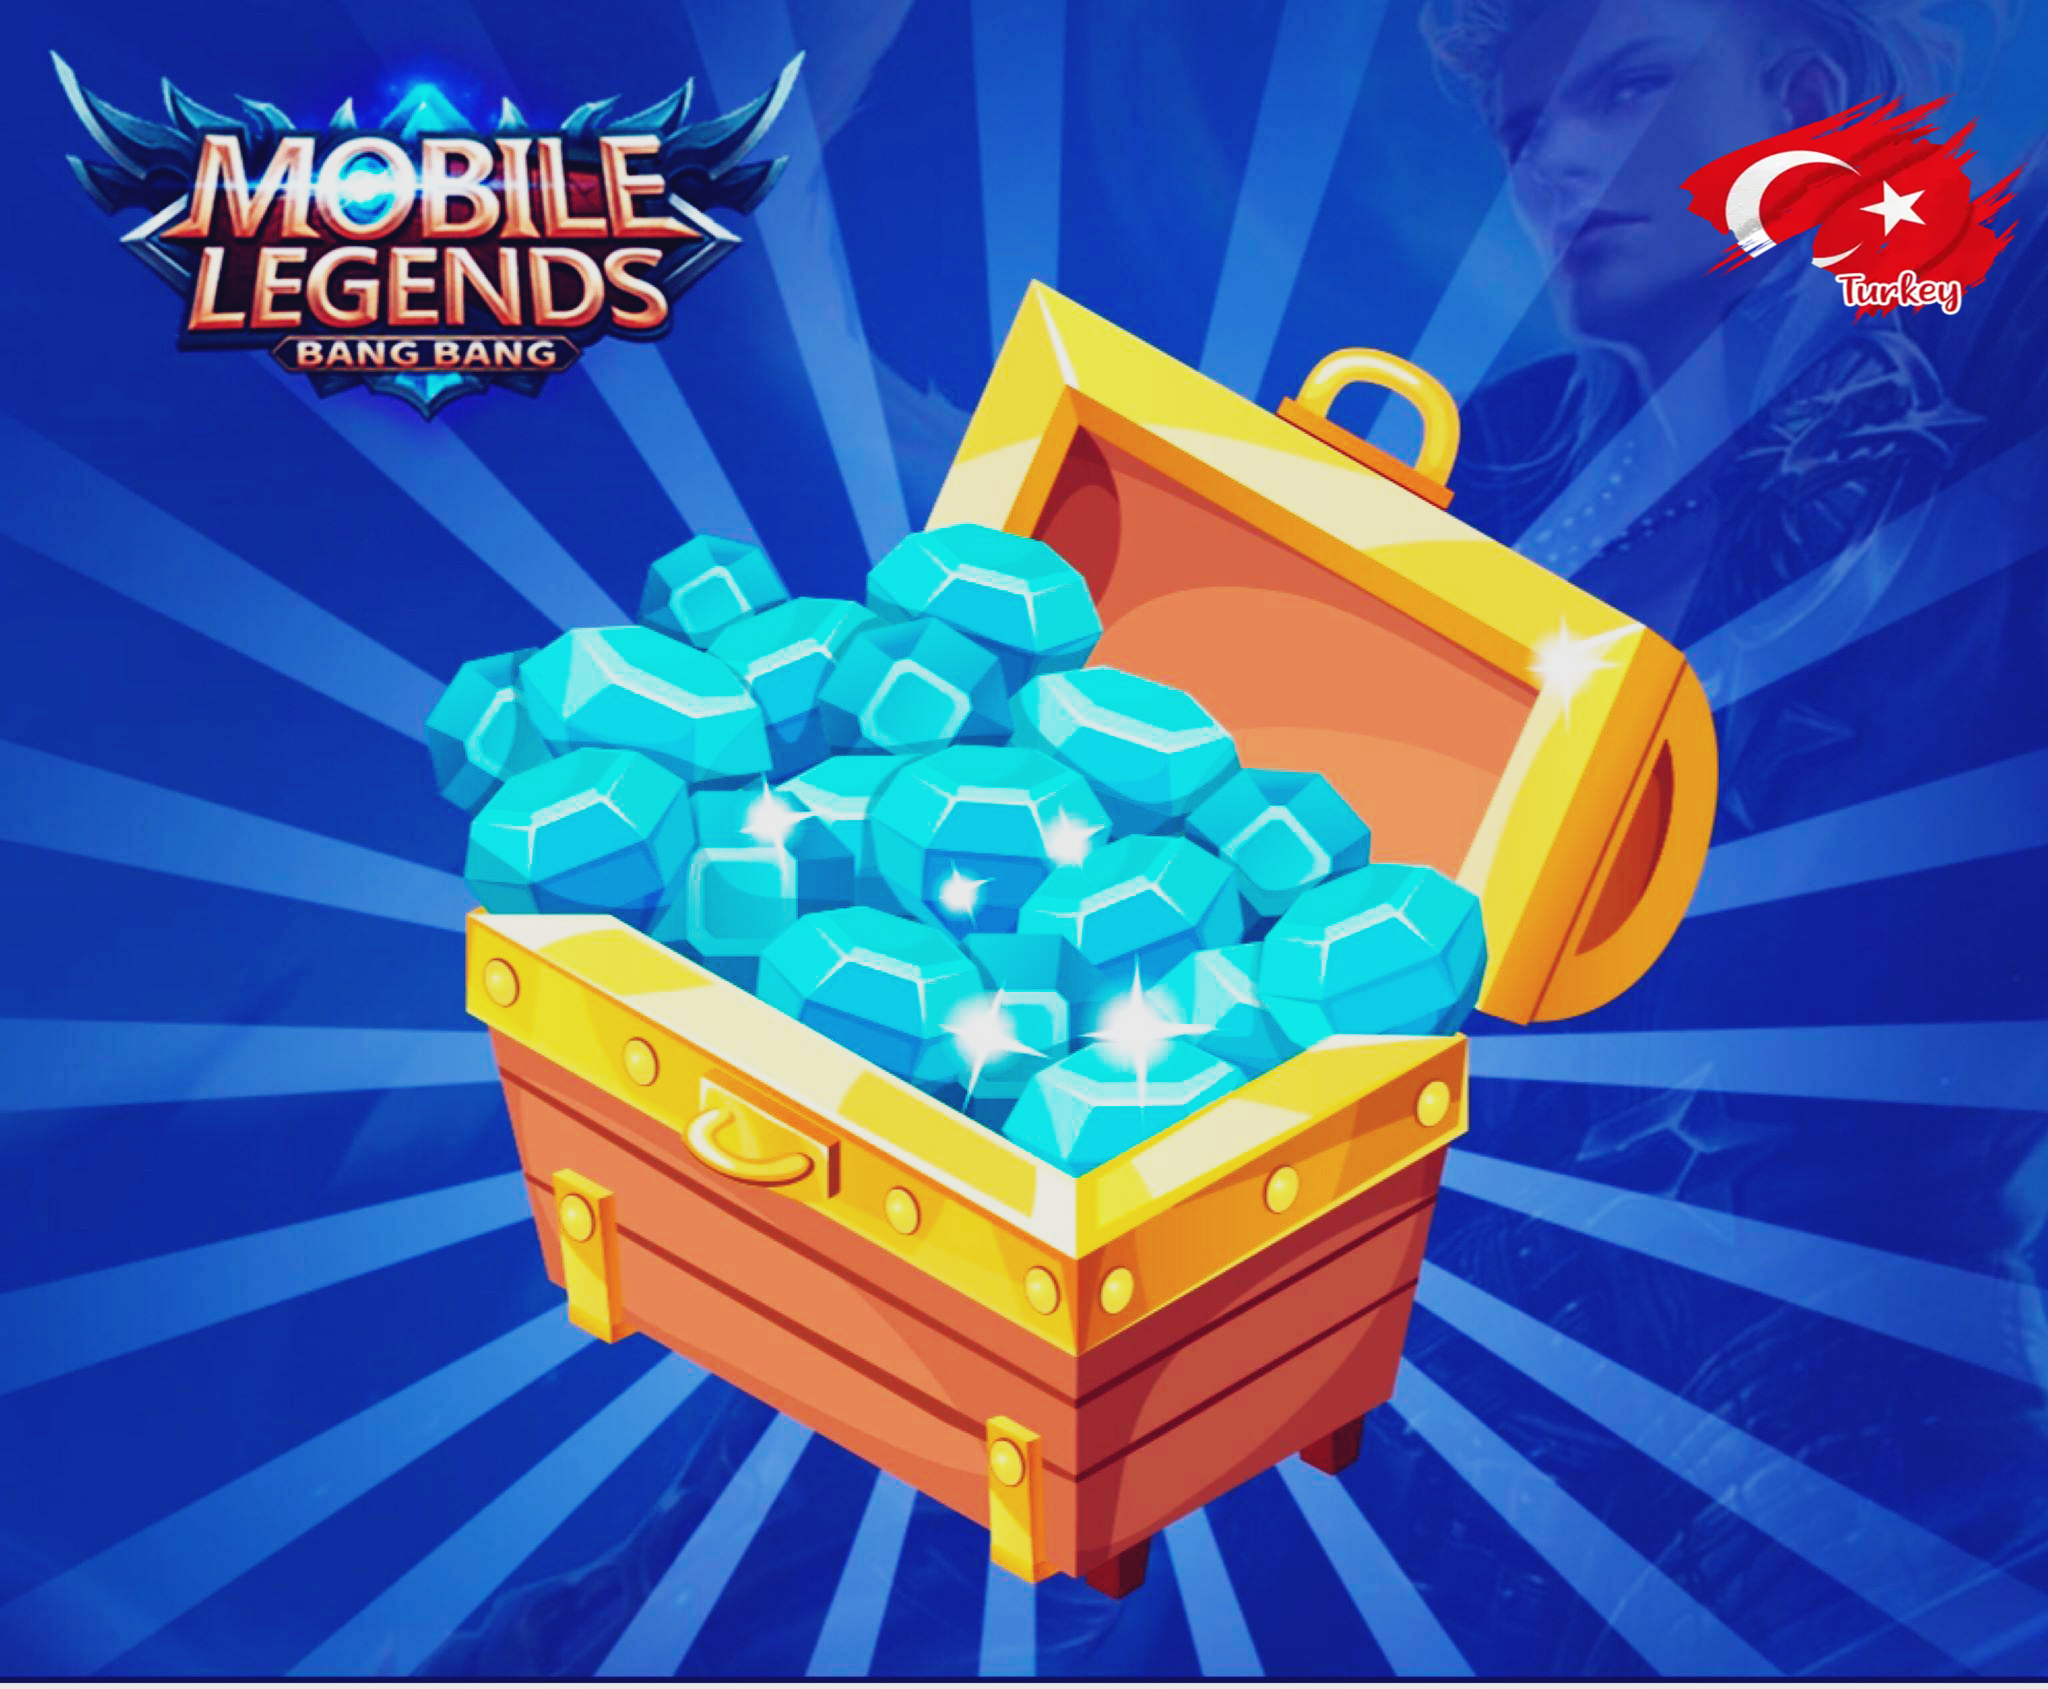 22 Diamonds + 2 Bonus Mobile Legends TOP UP